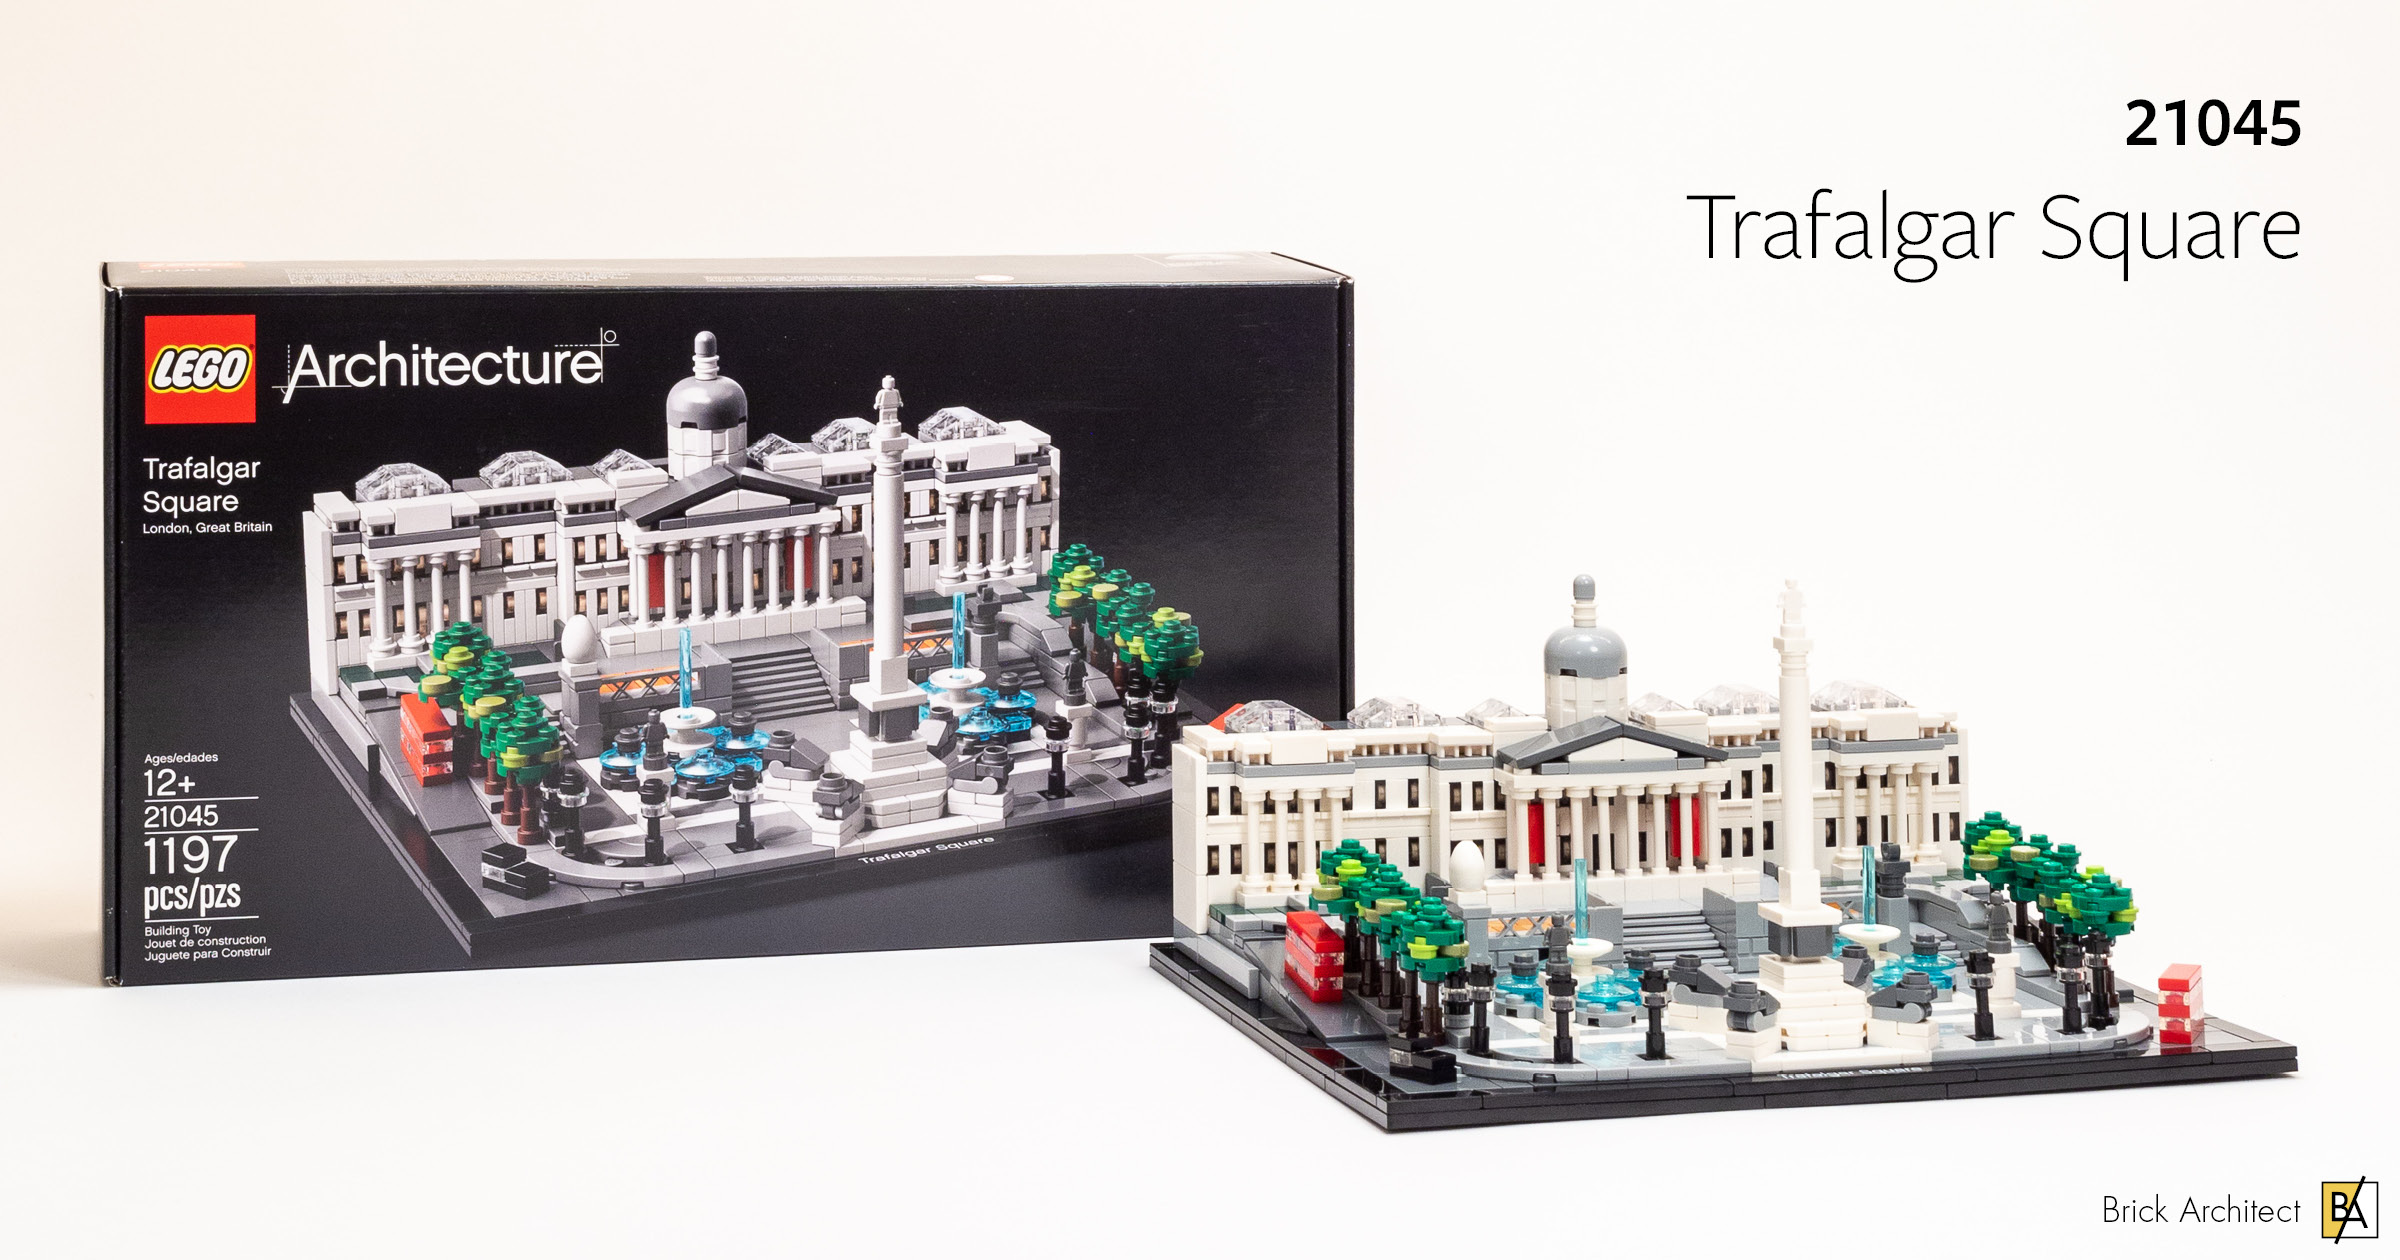 Review: #21045 Trafalgar Square - BRICK ARCHITECT